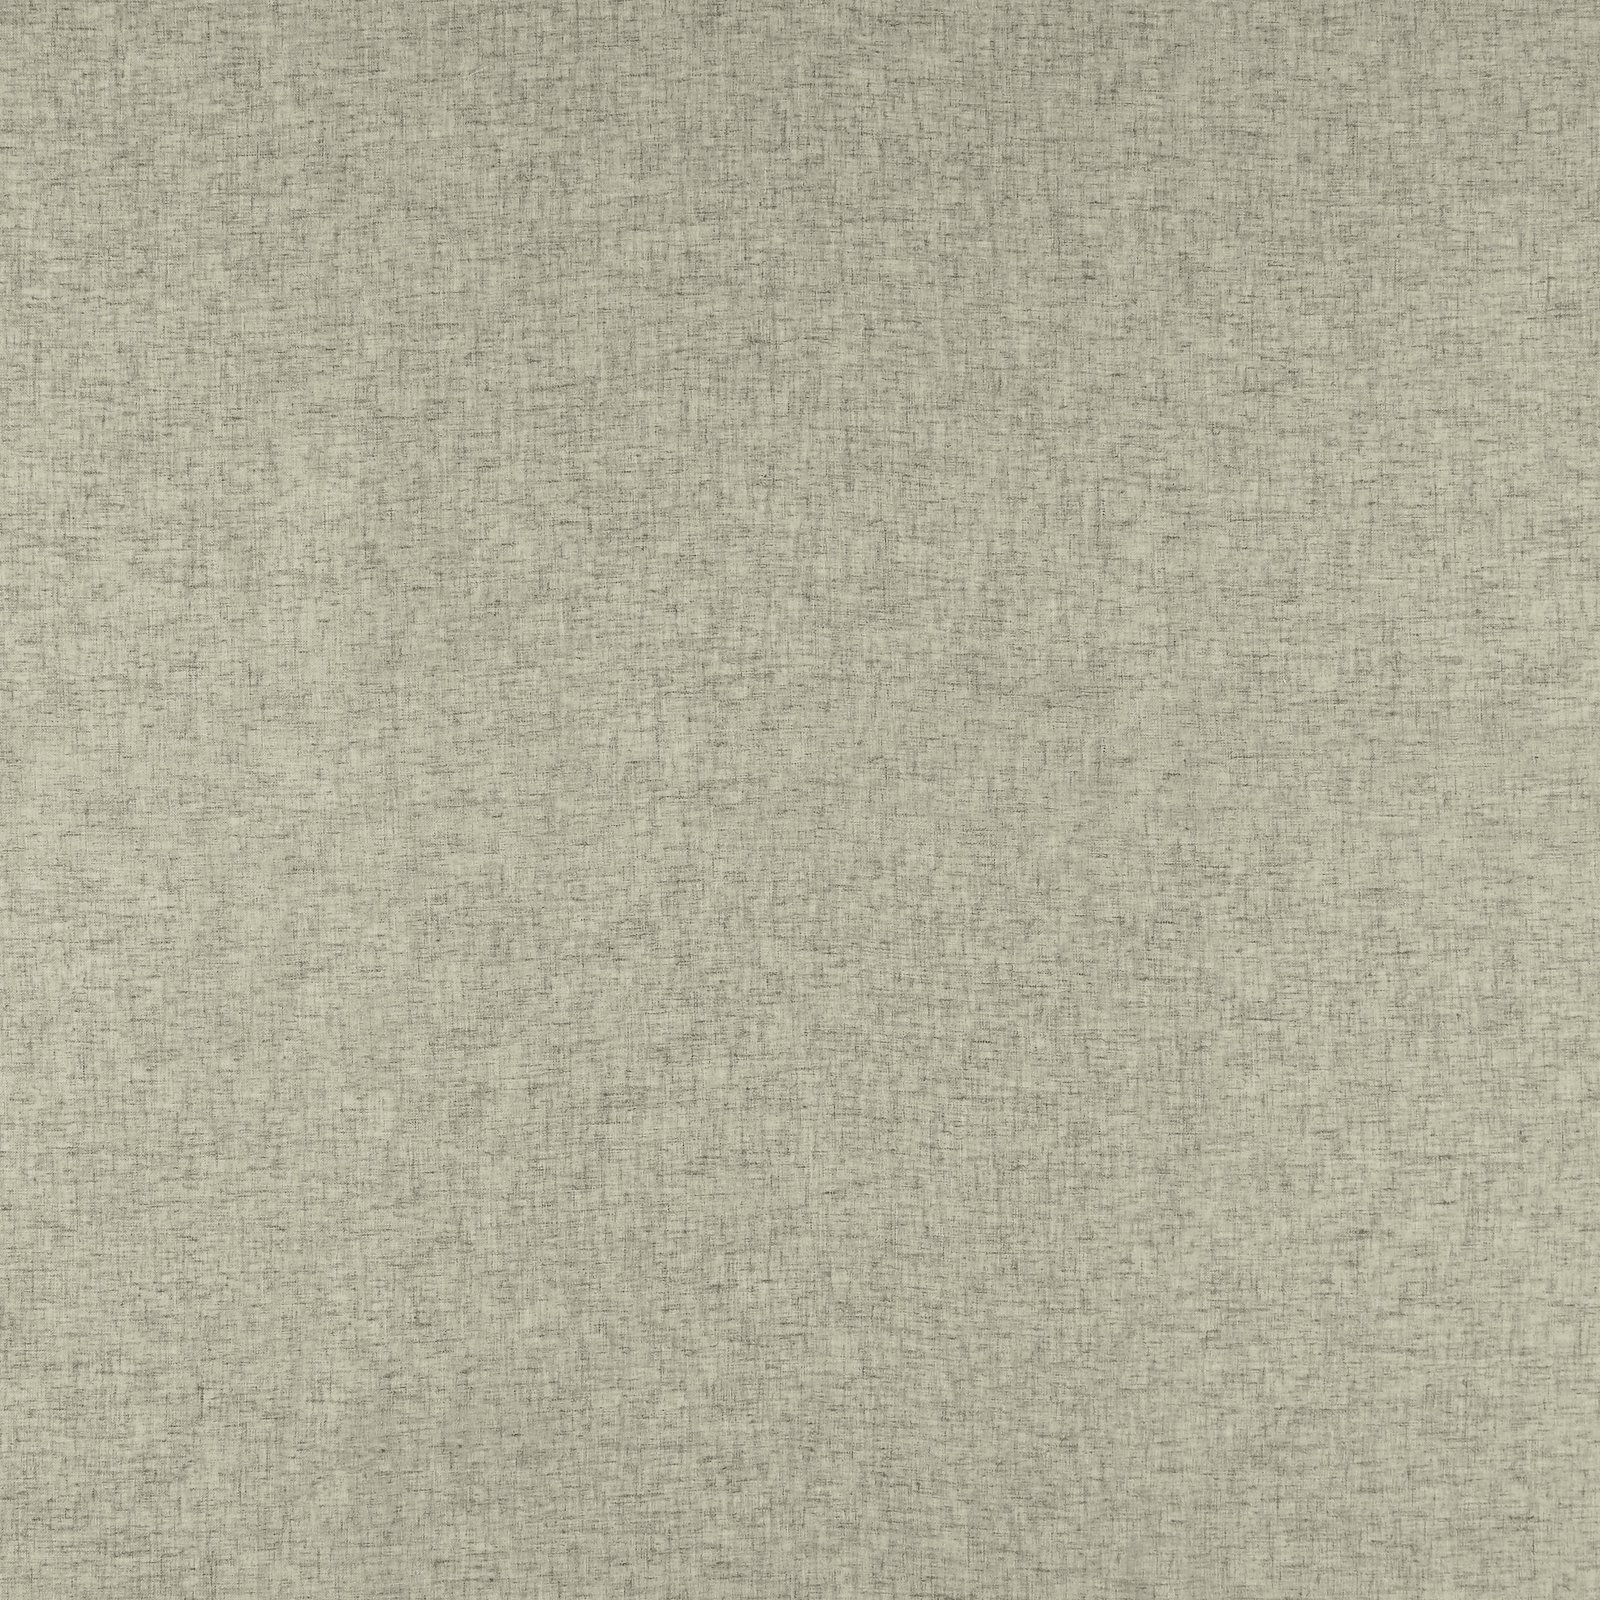 Voile steel grey polyester/linen blend 835193_pack_solid